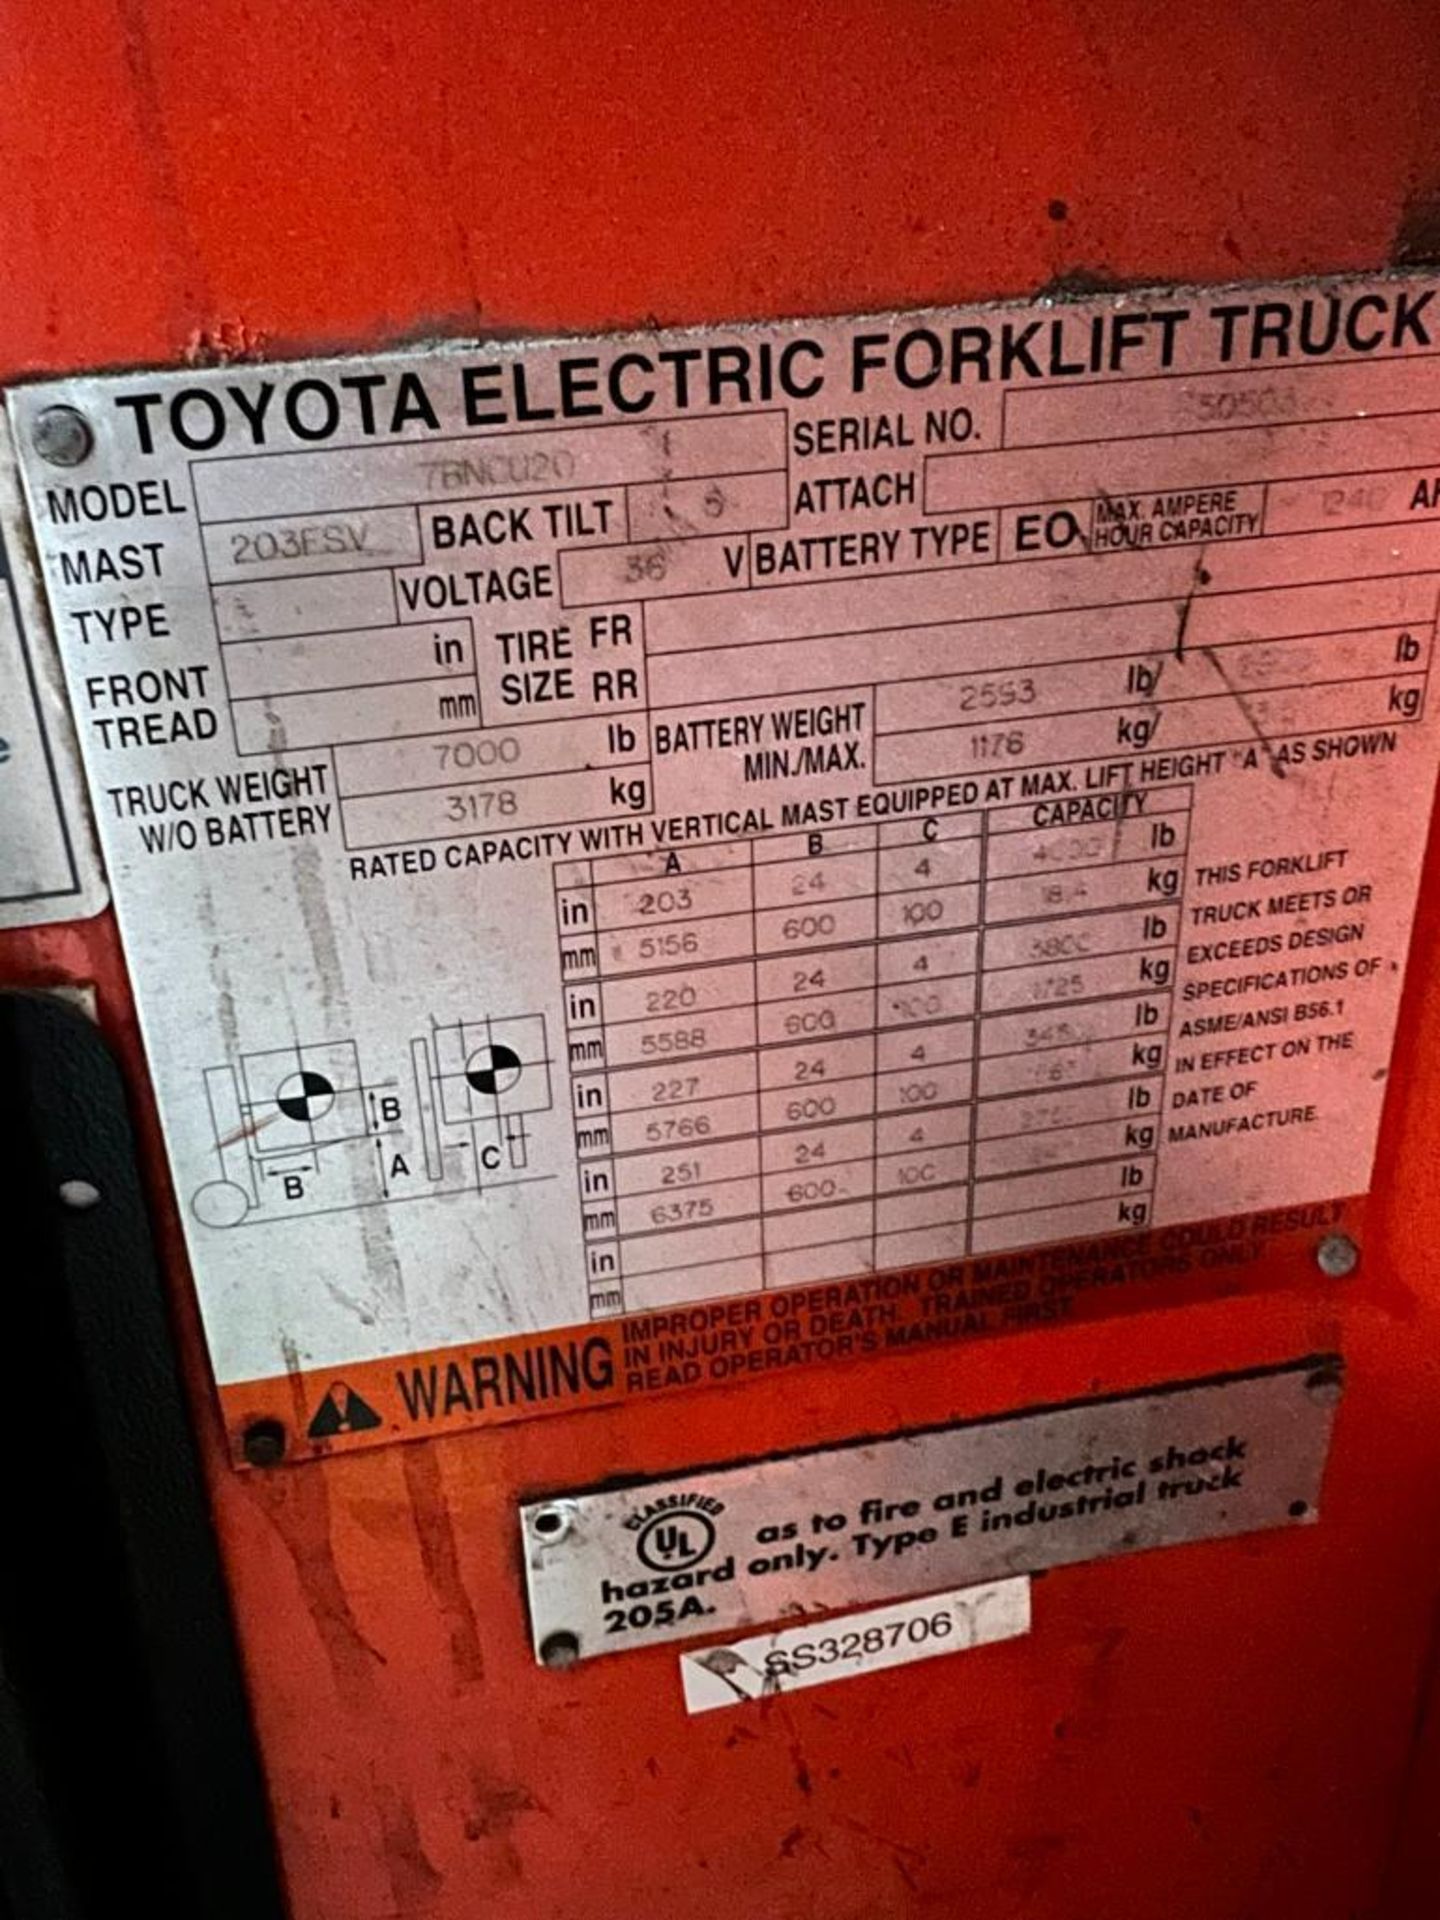 2010 Toyota Electric Standup Forklift, Model 7BNCU20, S/N 50503, 4,000 LB. Cap. - Image 4 of 4